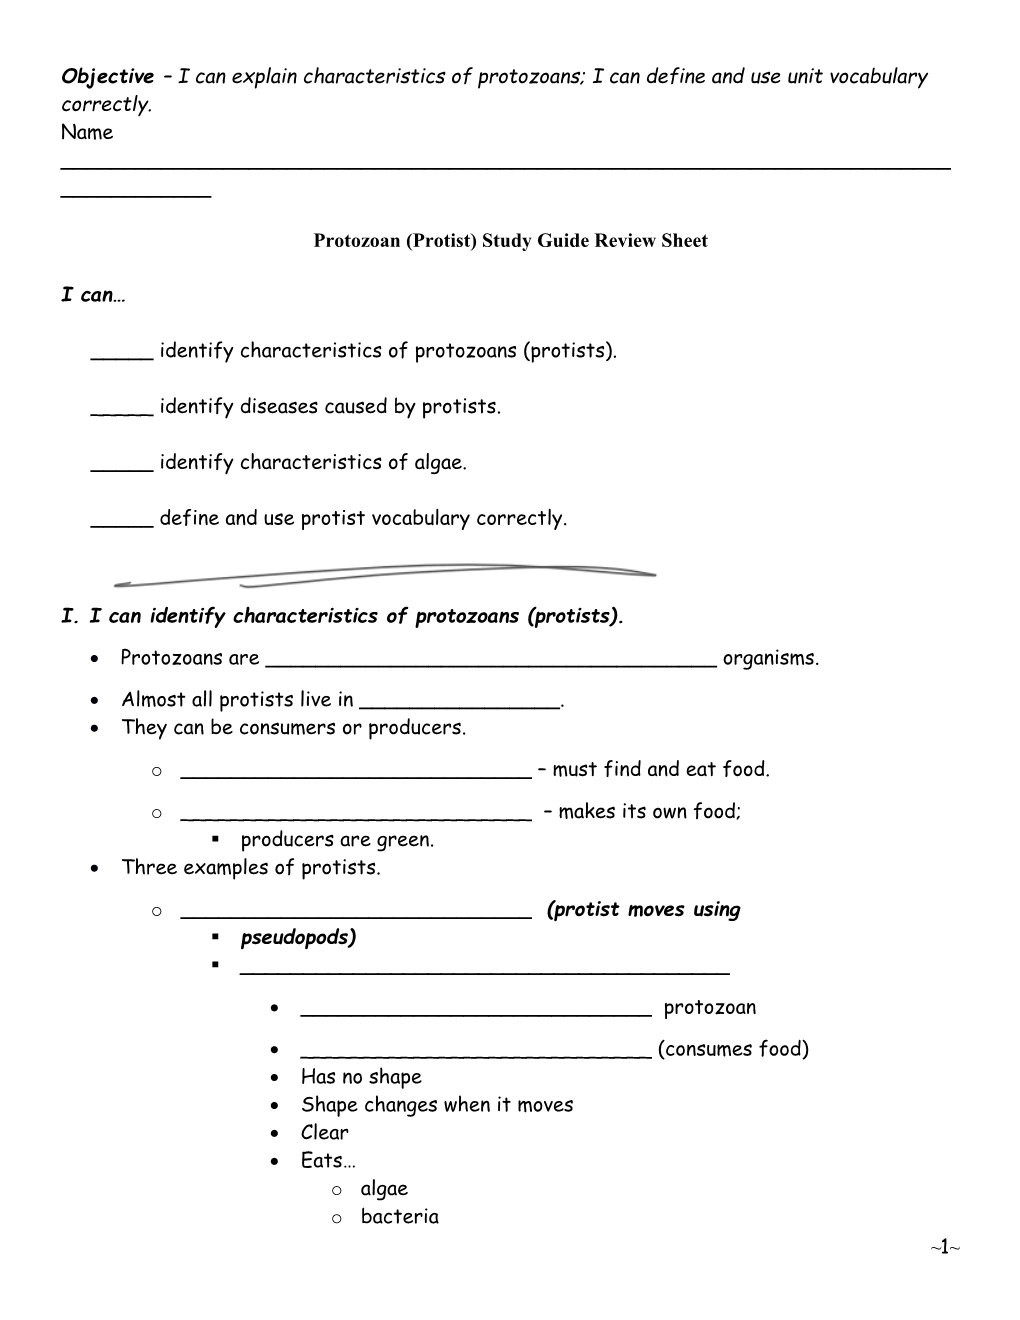 Protozoan (Protist) Study Guide Review Sheet